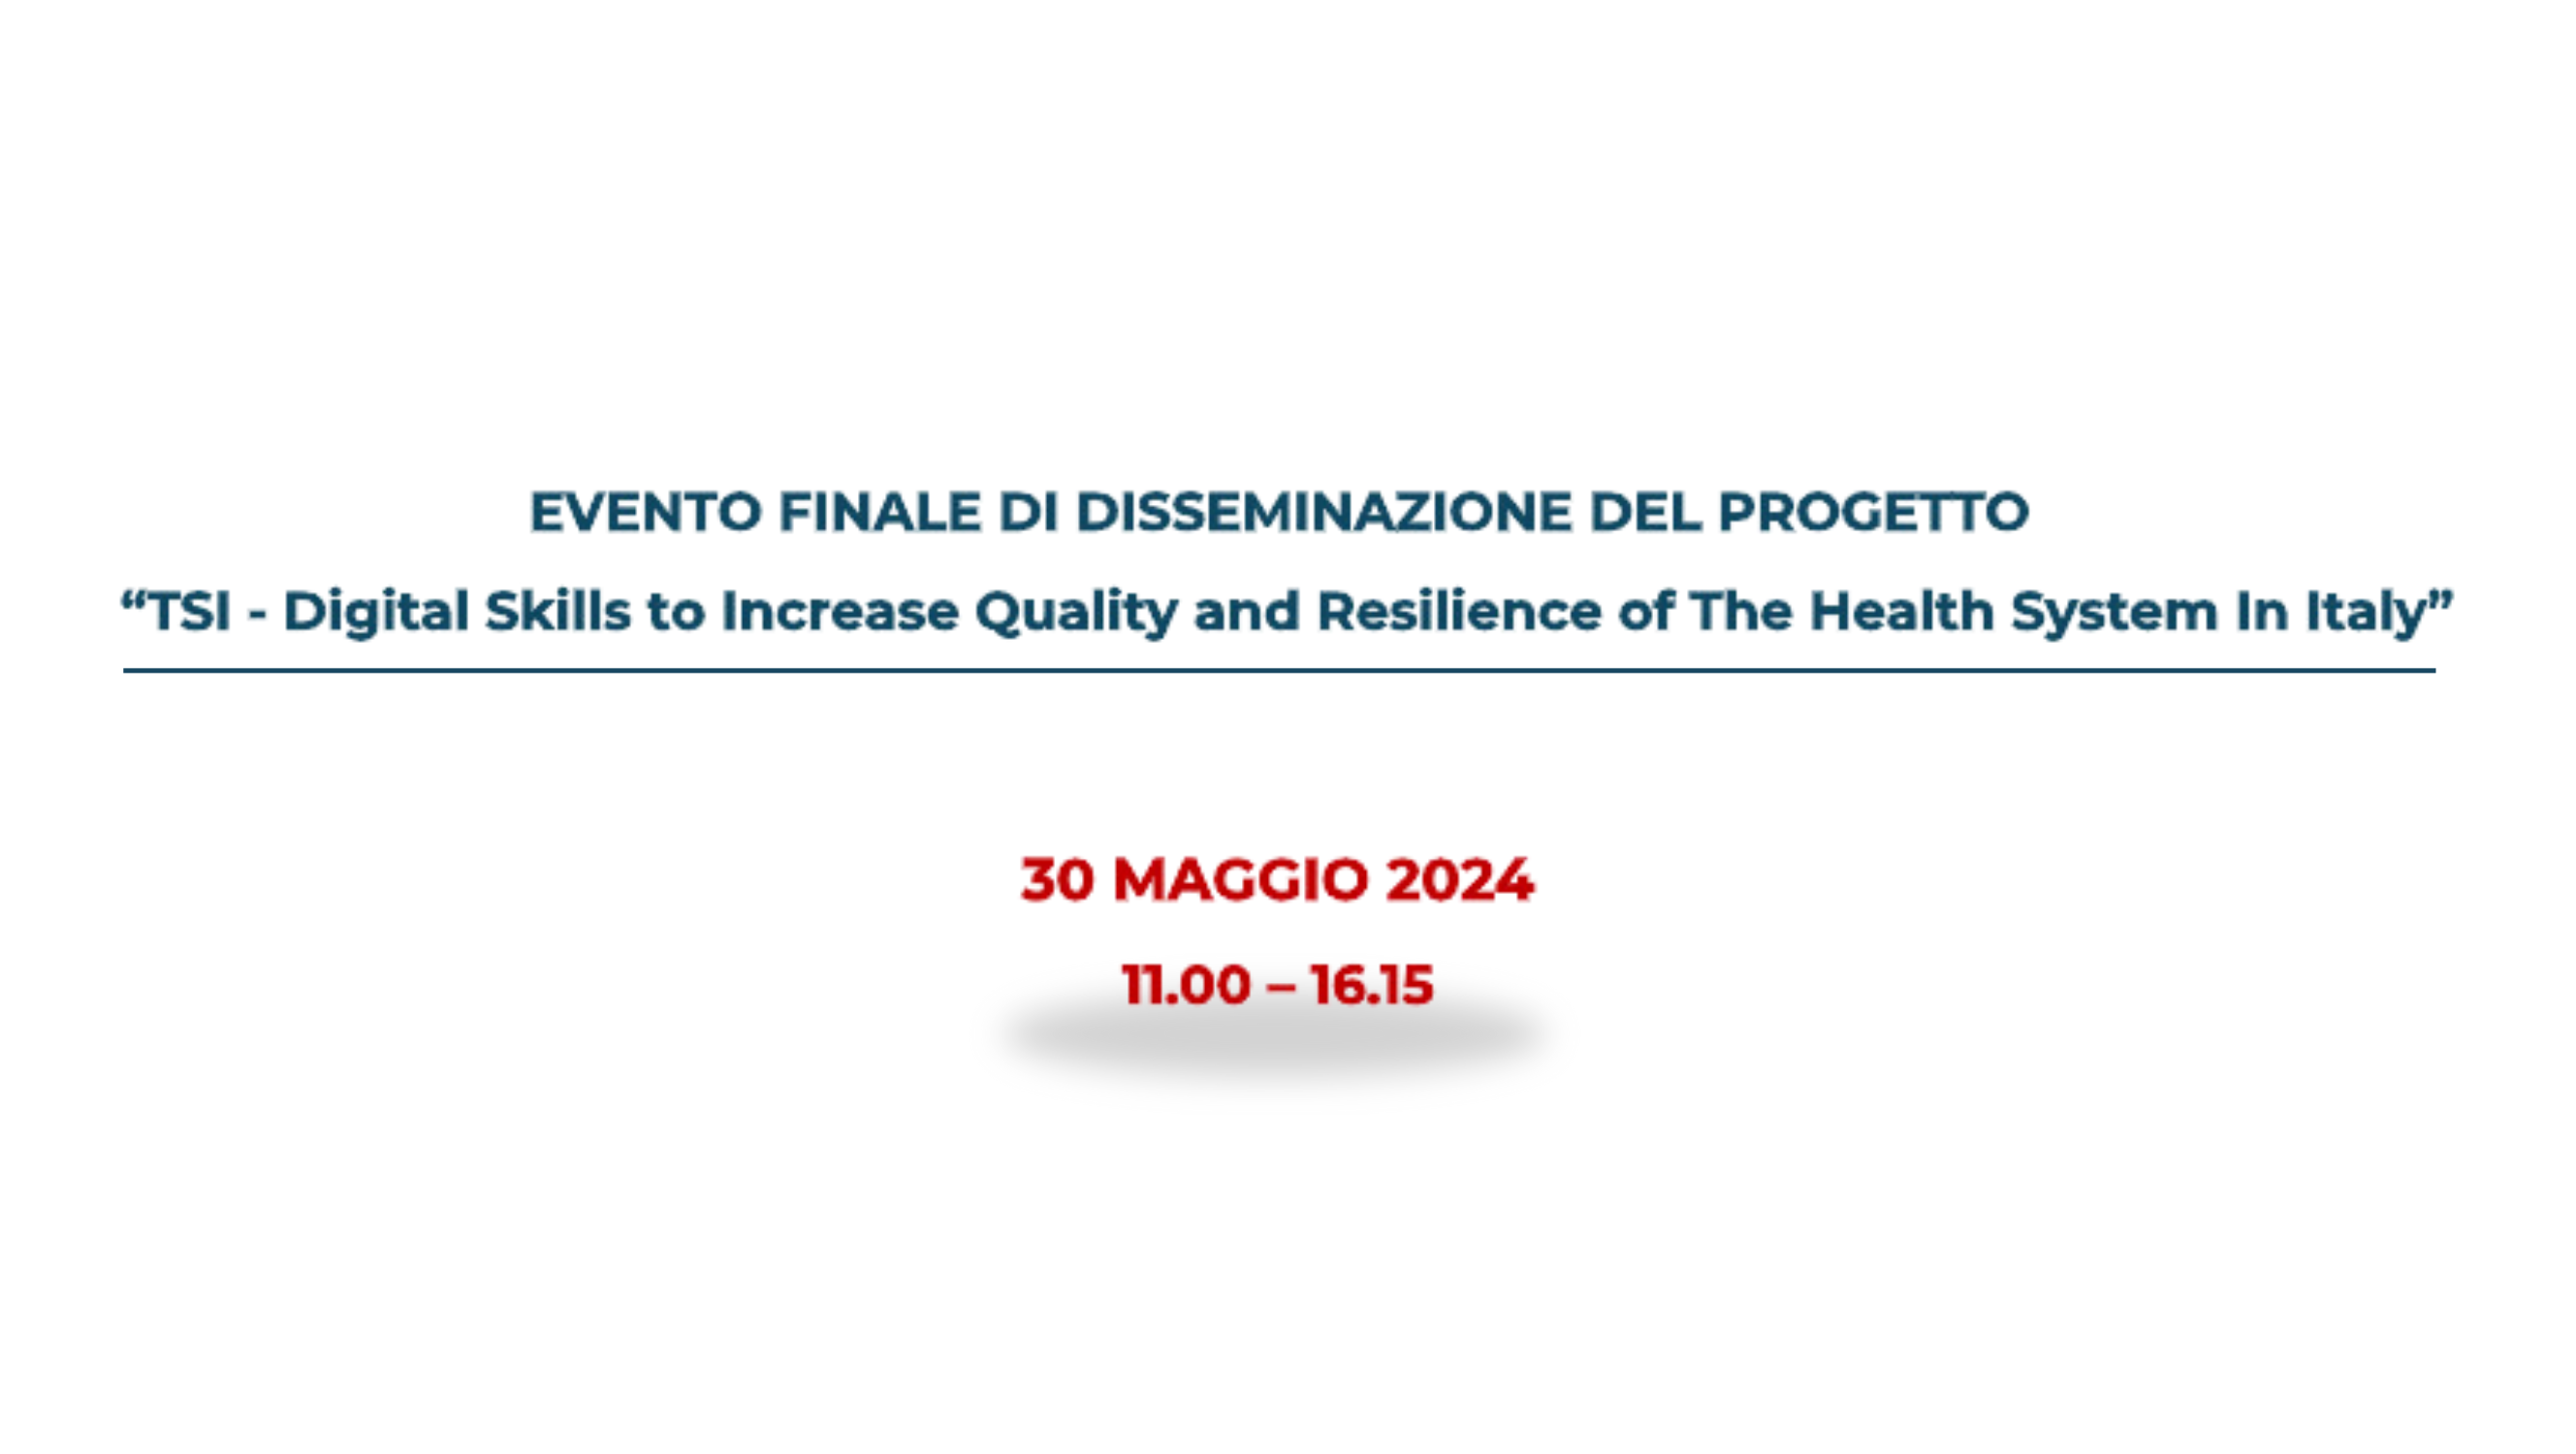 Evento finale di disseminazione del progetto “TSI - Digital Skills to Increase Quality and Resilience of The Health System In Italy”- 30.05.2024